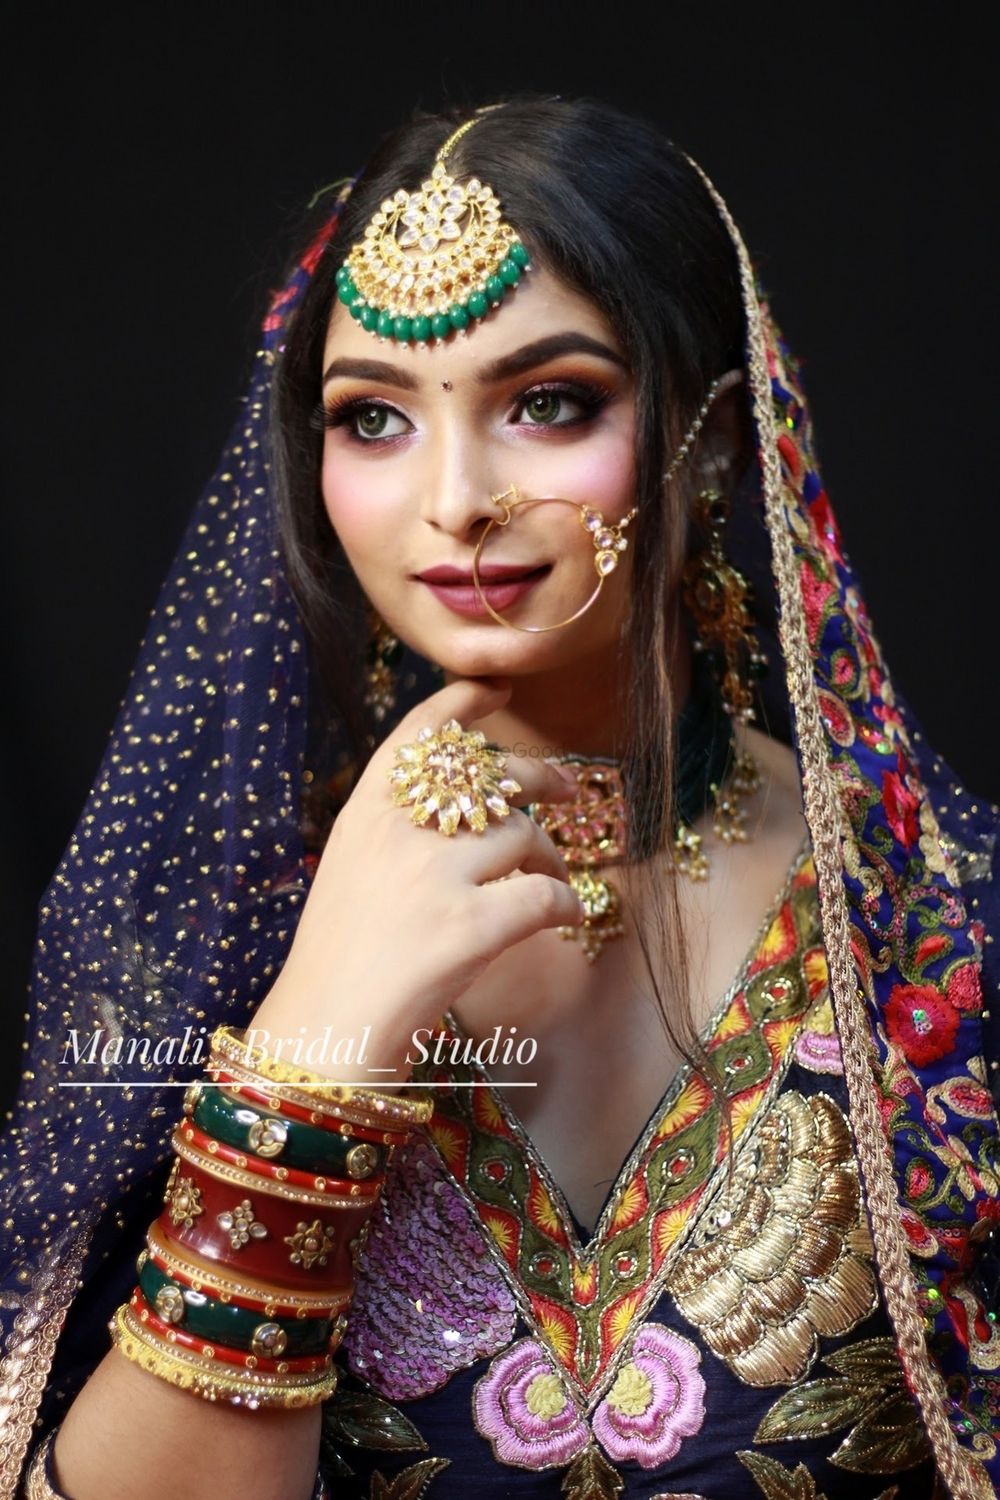 Photo From AIRBRUSH Makeup - By Manali Bridal Studio